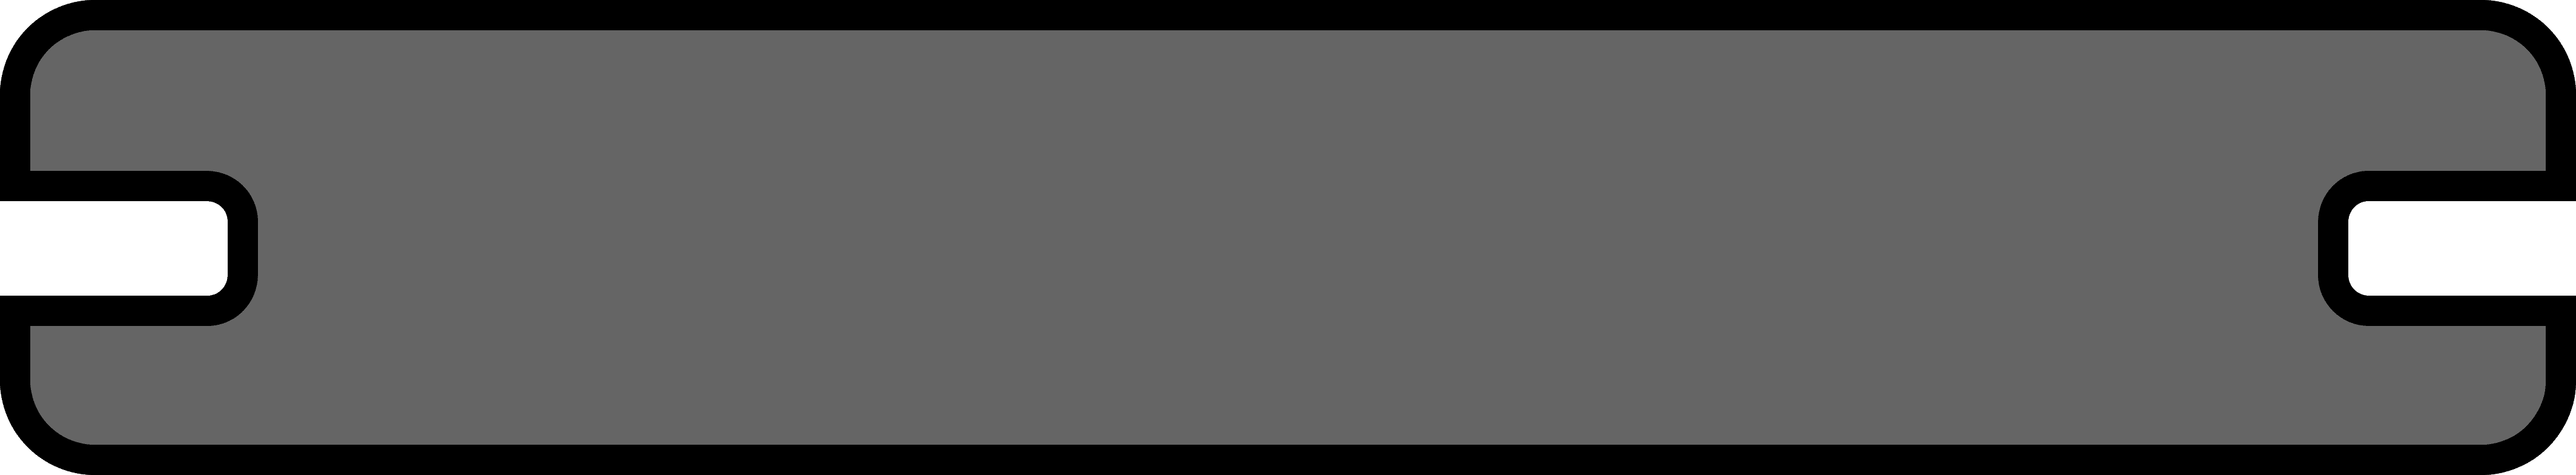 Image of a Fiberon Grooved Board Side Profile